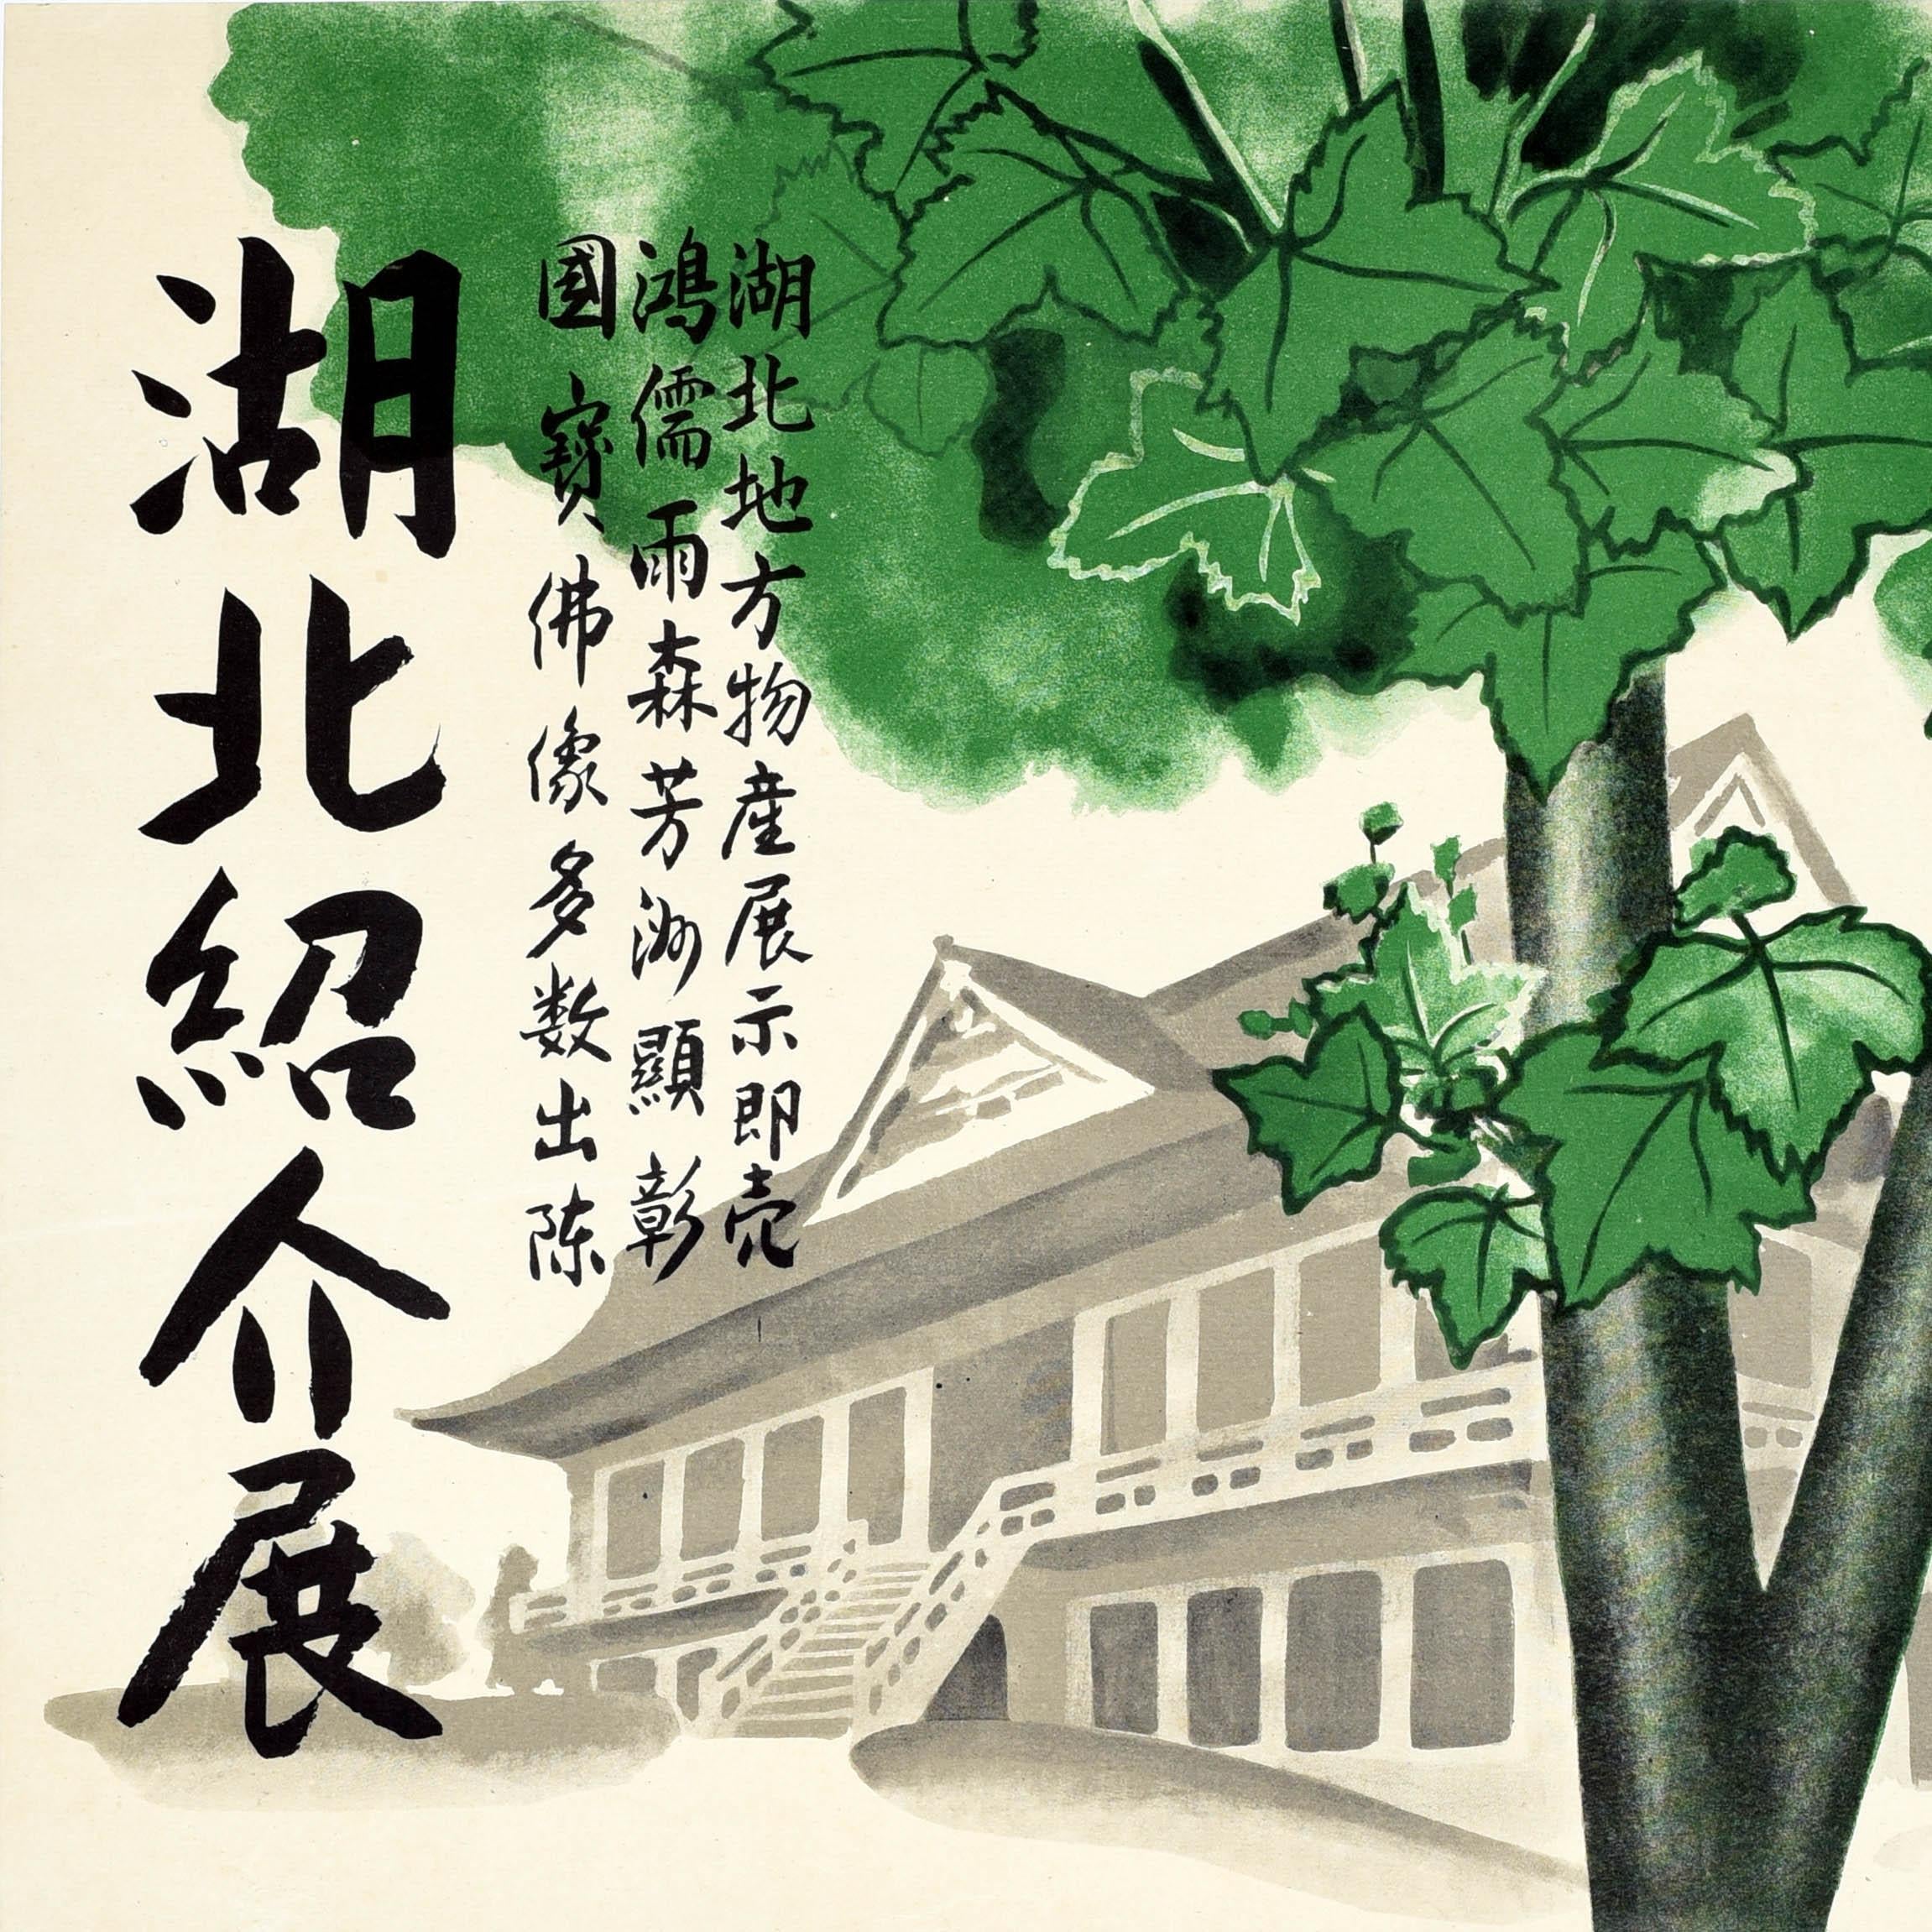 Japanese Original Vintage Advertising Poster Artifacts Exhibition Otsu Shiga Japan Design For Sale